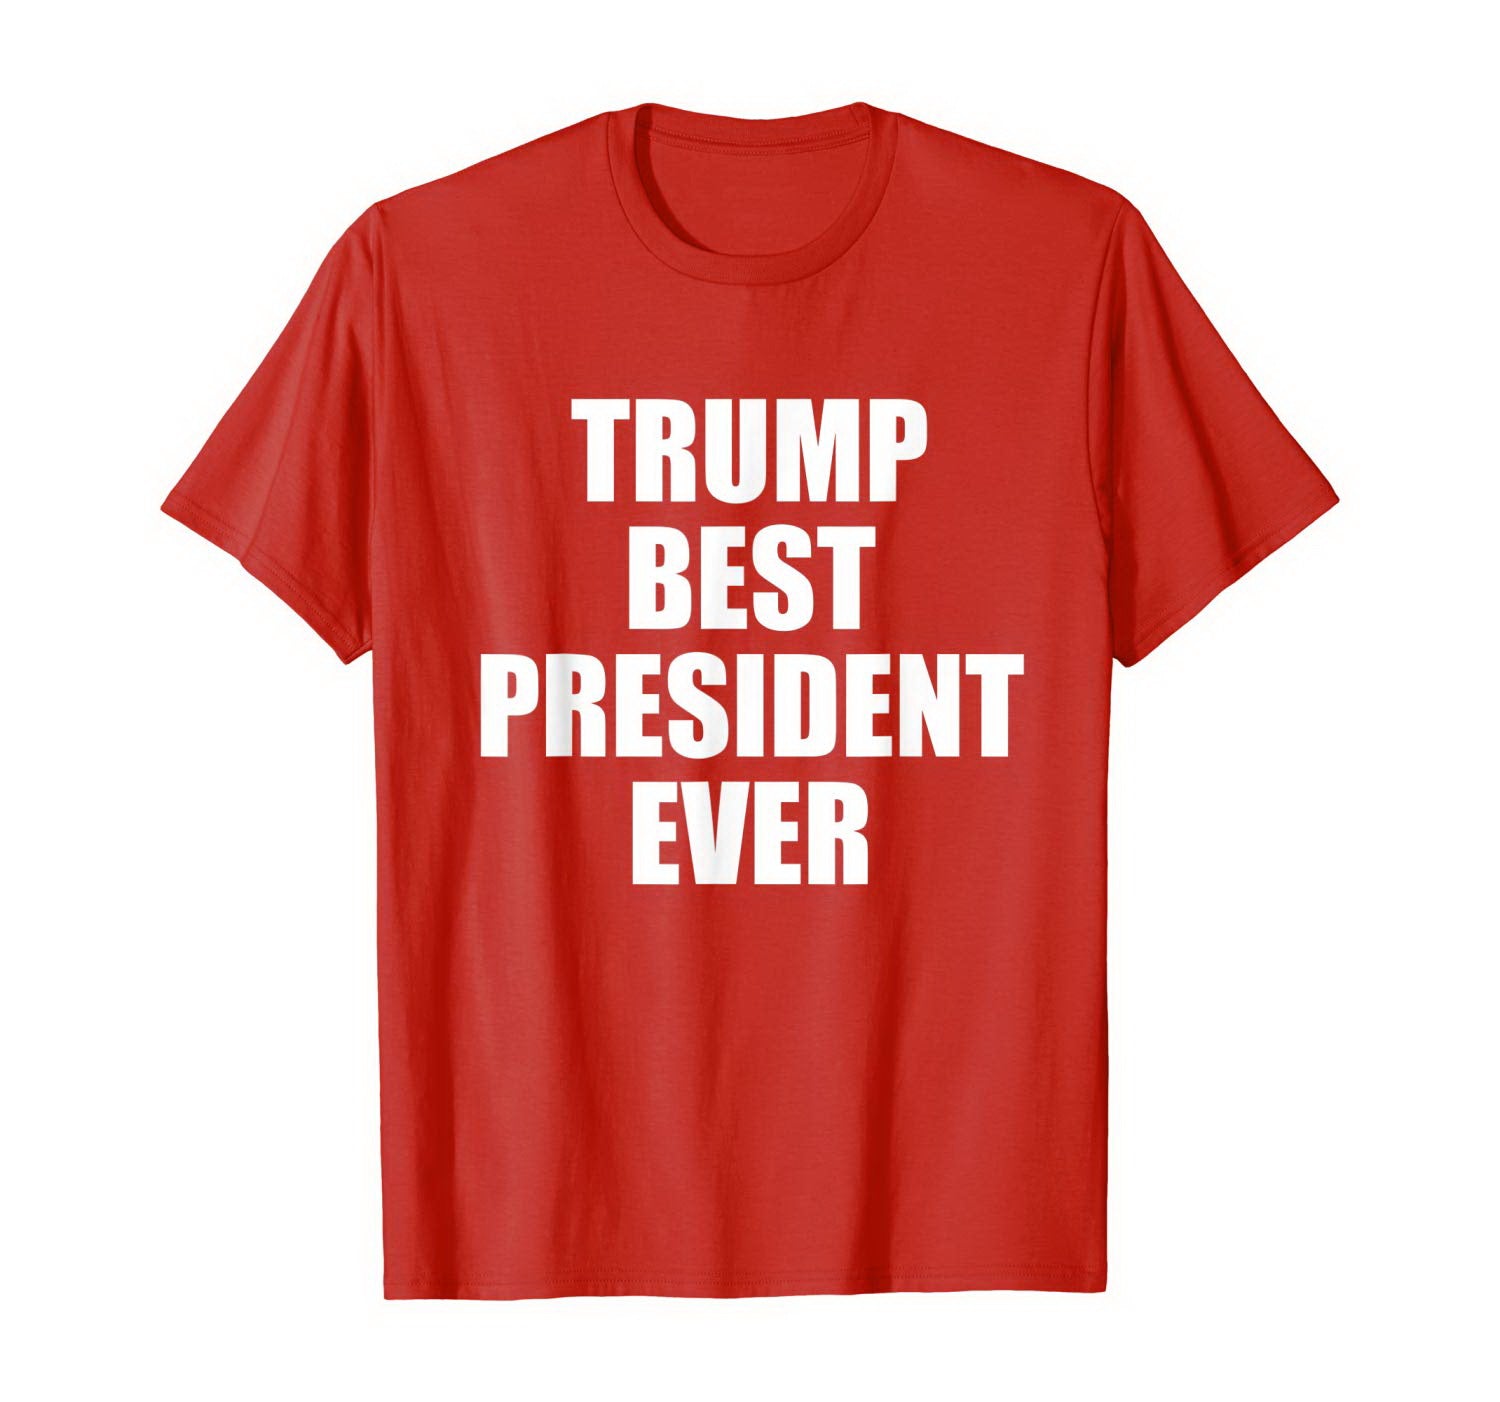 Trump_Best_President_Ever_2020_Election_T-Shirt_New__54131_1024x1024@2x.jpg